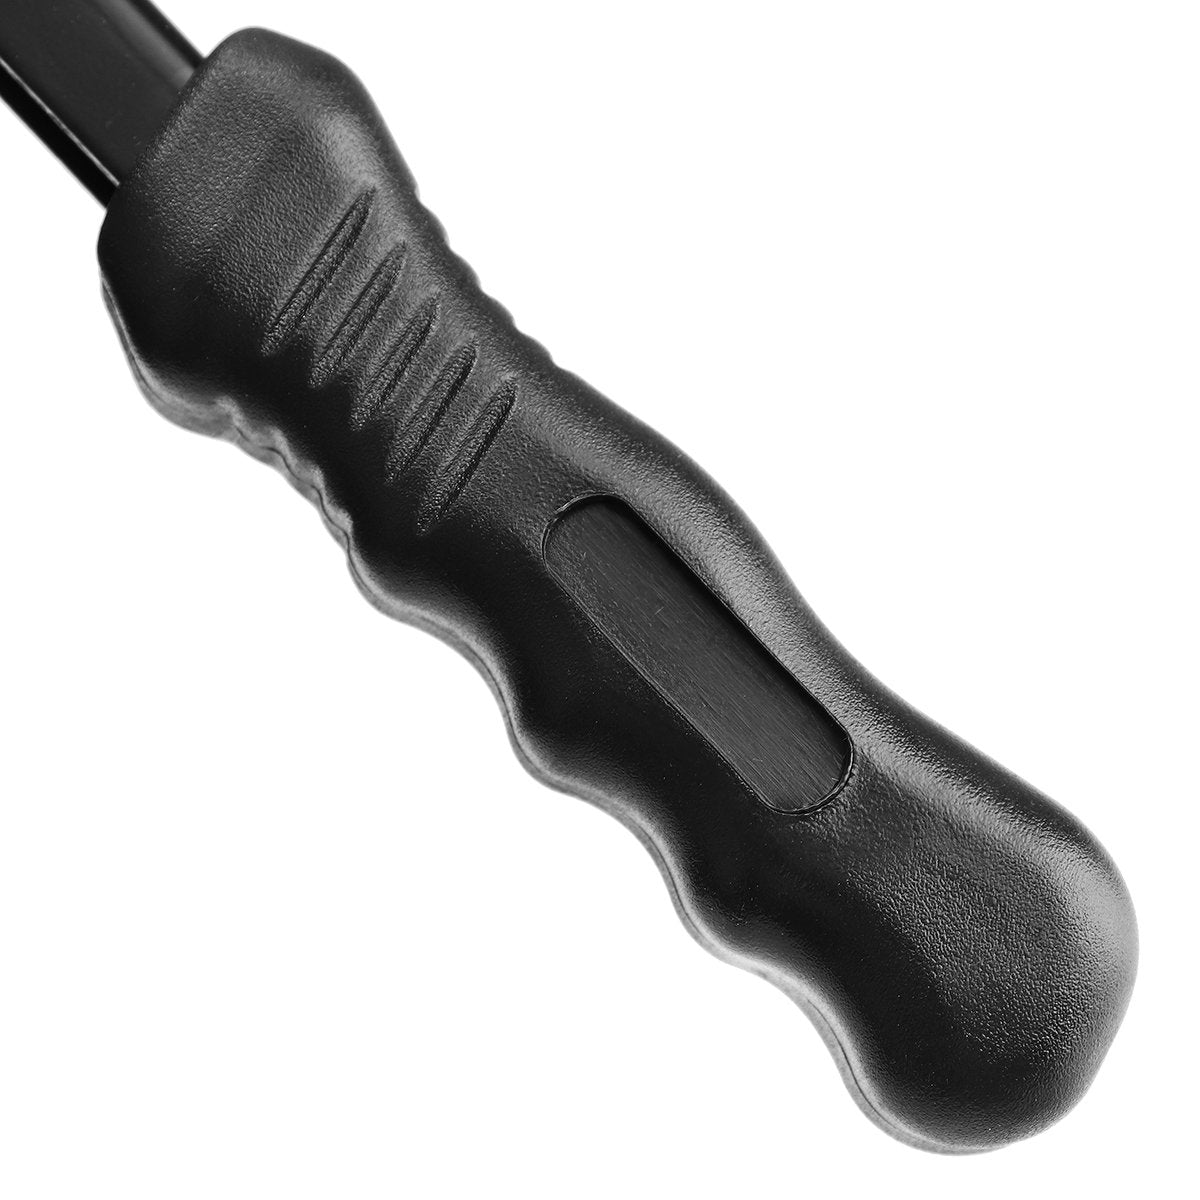 900Pcs Rivet Nut Tool Hand Riveter Gun Rivet Nut Setter Kit with Case CraveStore